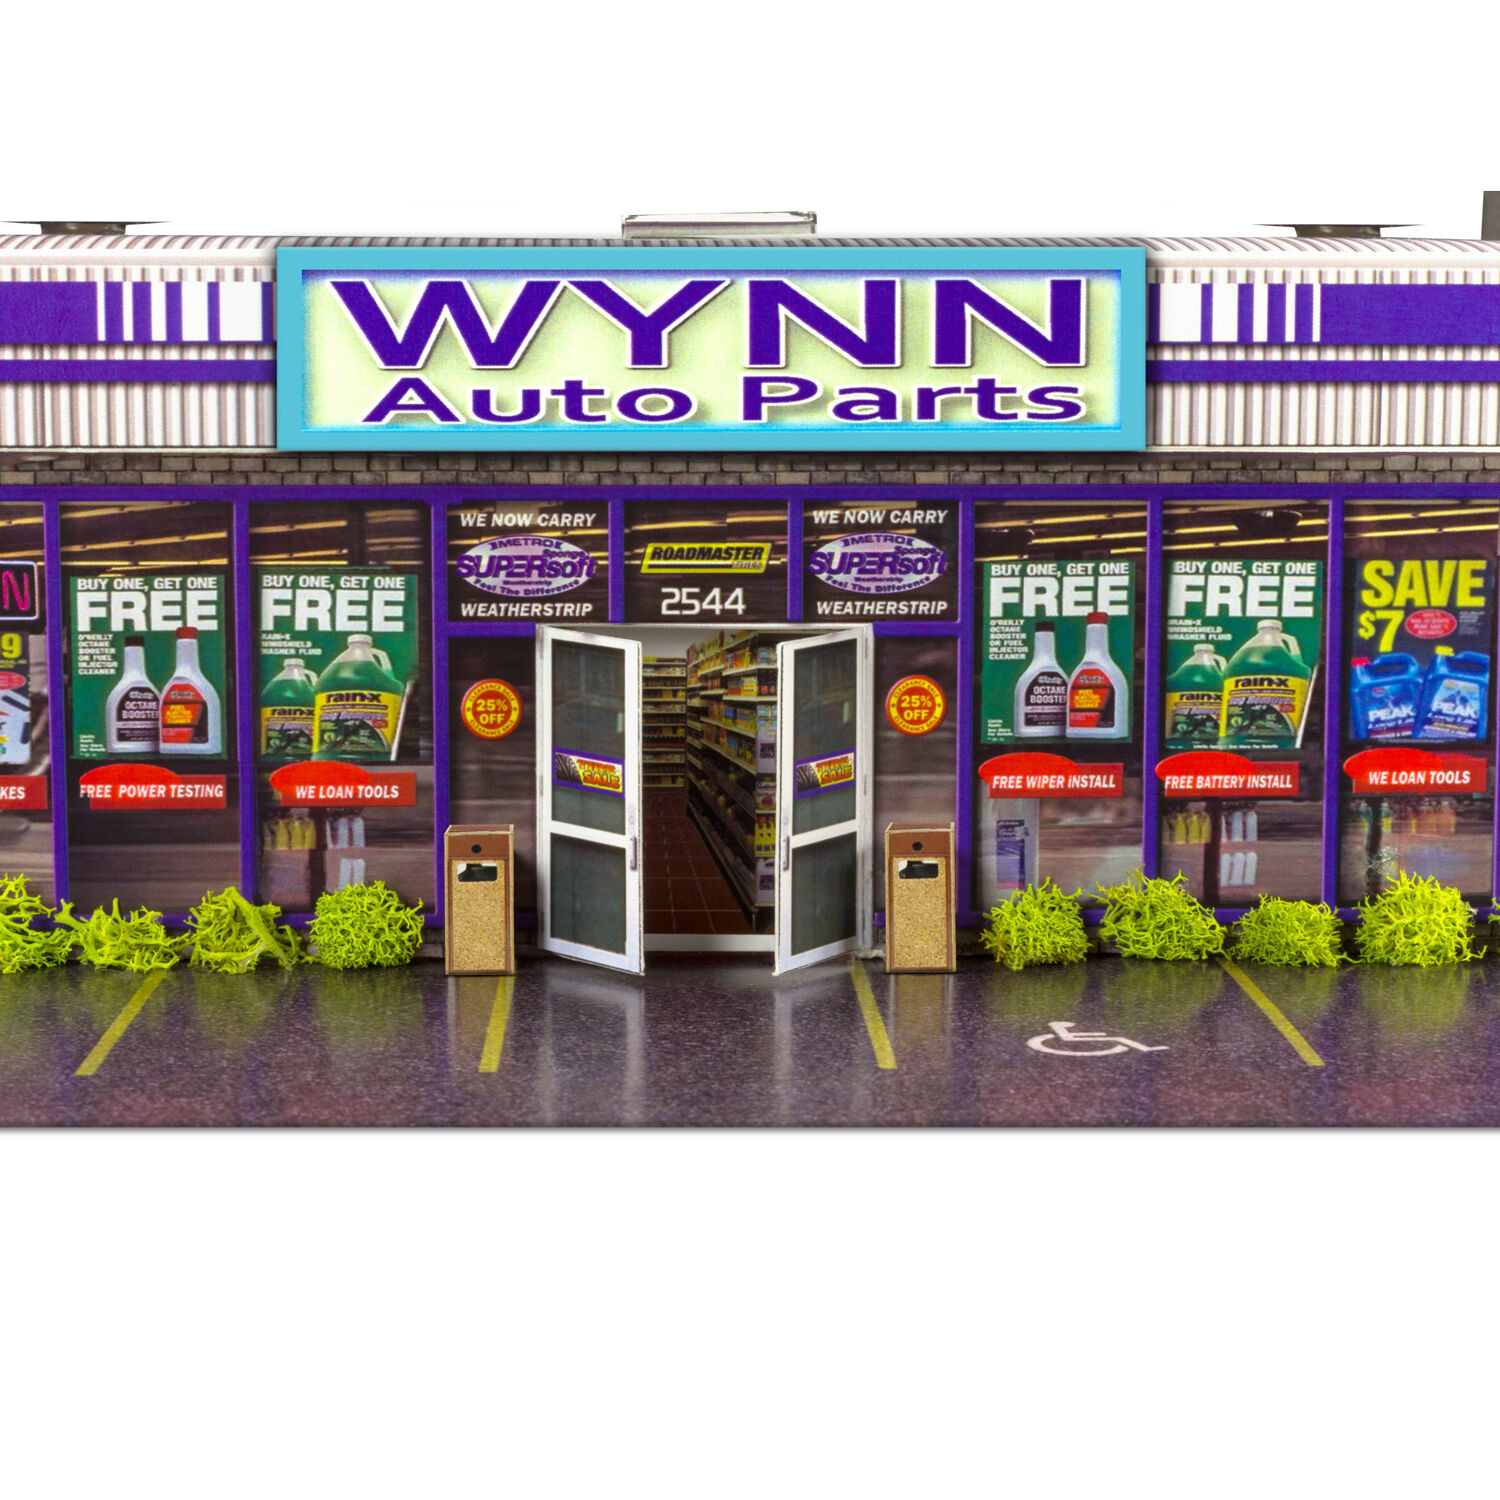 BK 6435 1/64 Slot Car HO Wynn Auto Parts Store Photo Real Kit Model Diorama Scenery